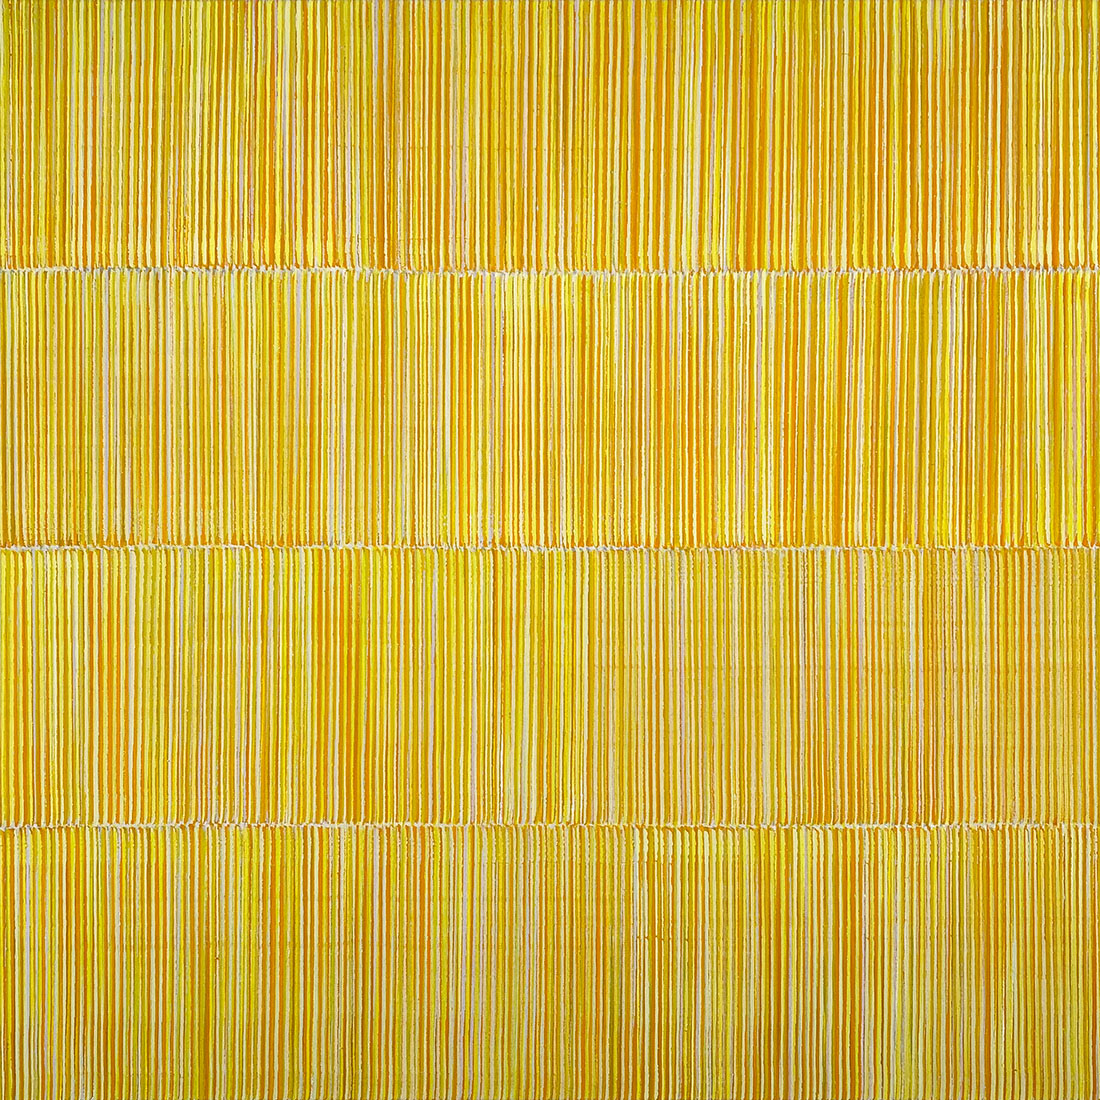 Nikola Dimitrov, FarbKlang Gelb A, 2021, Pigmente, Bindemittel auf Leinwand, 80 × 80 cm